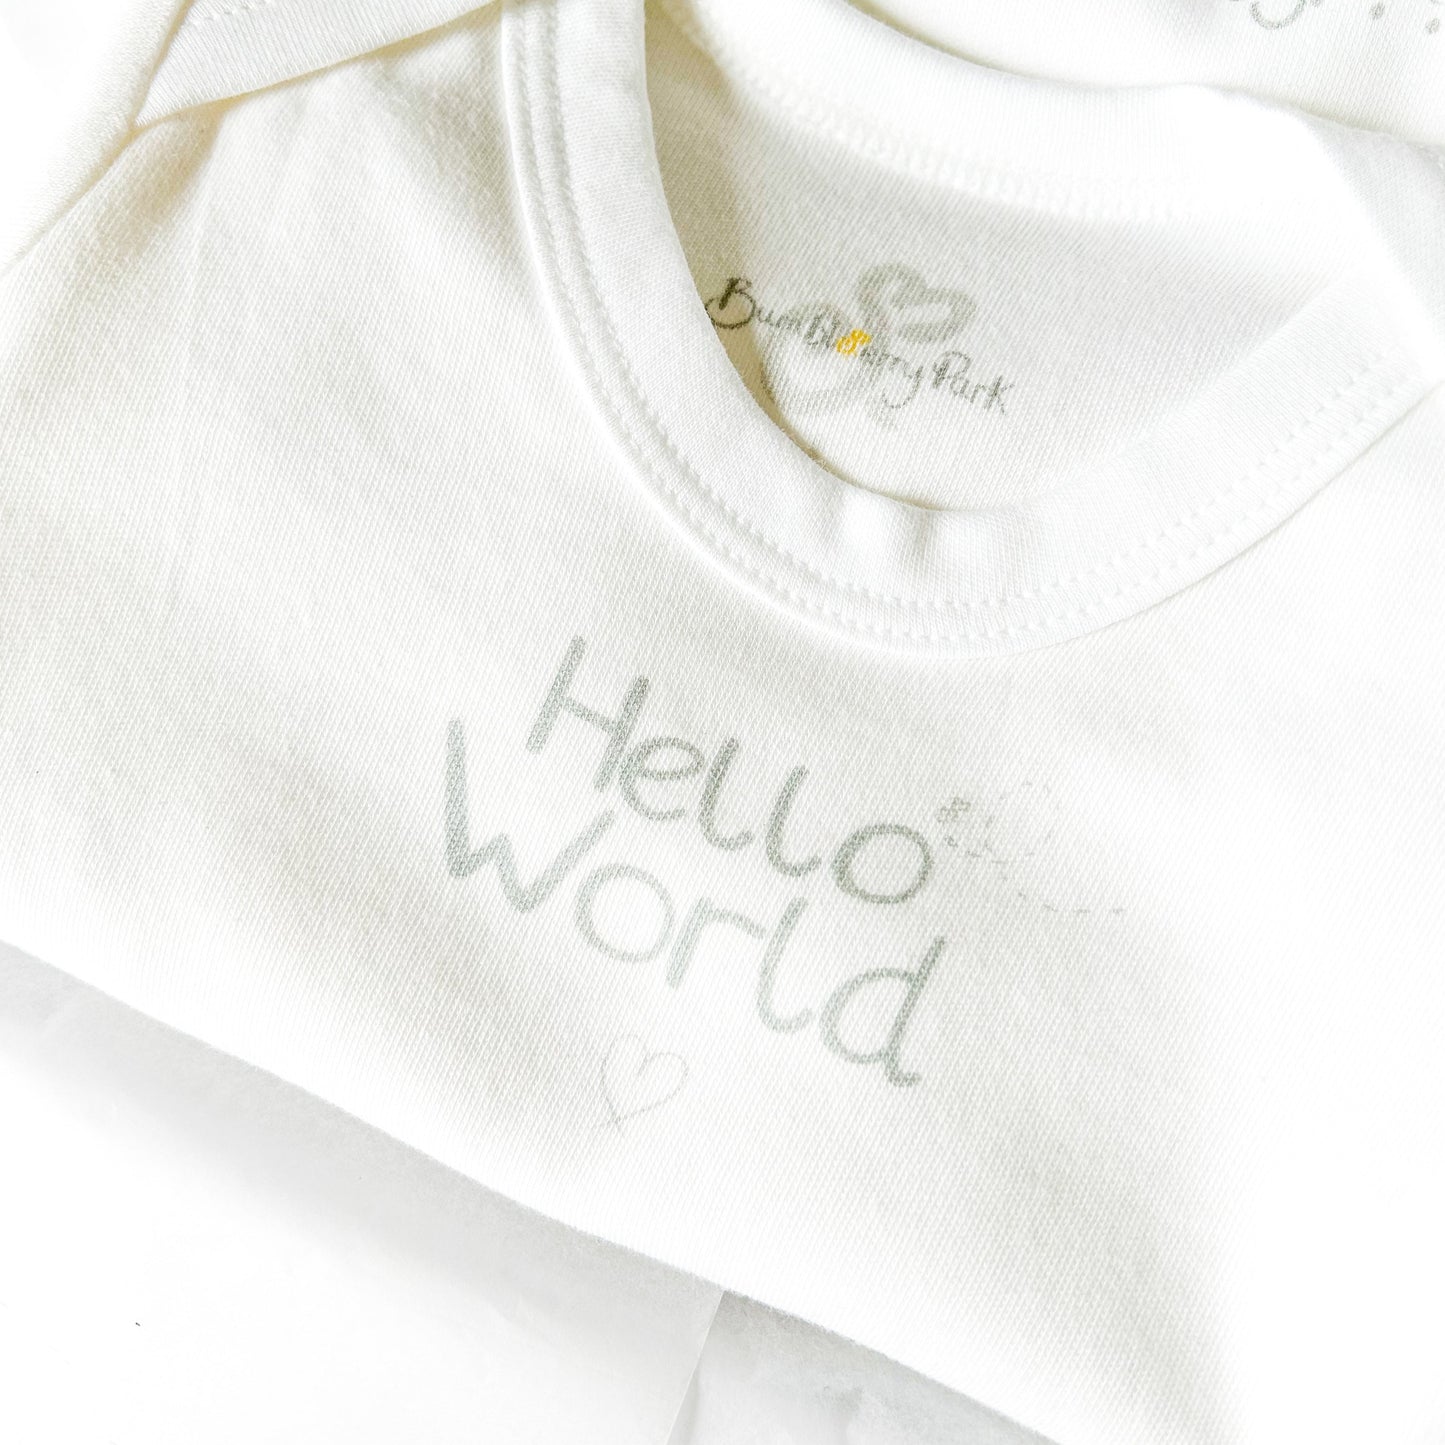 hello world white baby bodysuit with silver love heart print